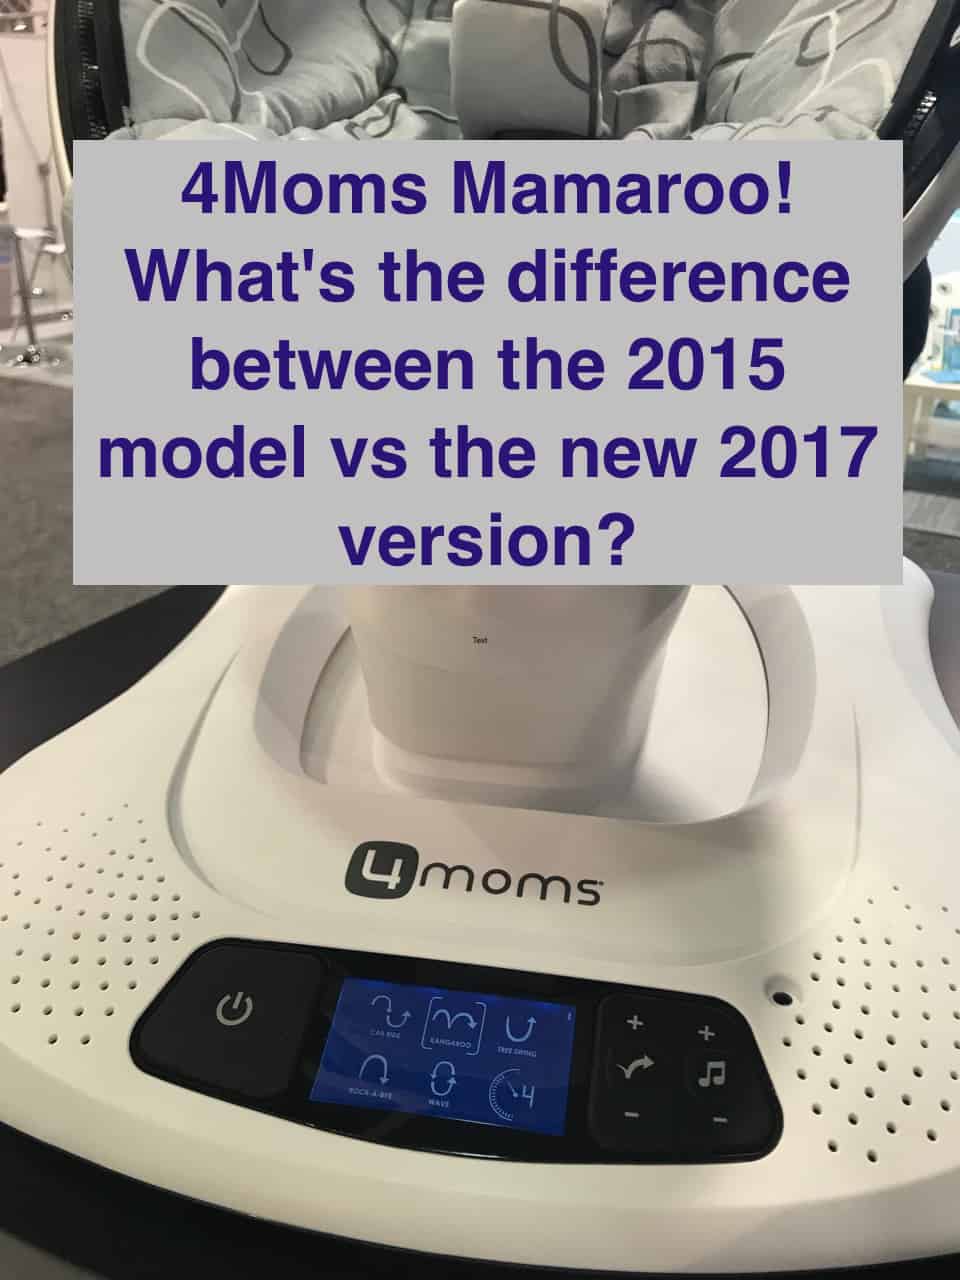 newest mamaroo model